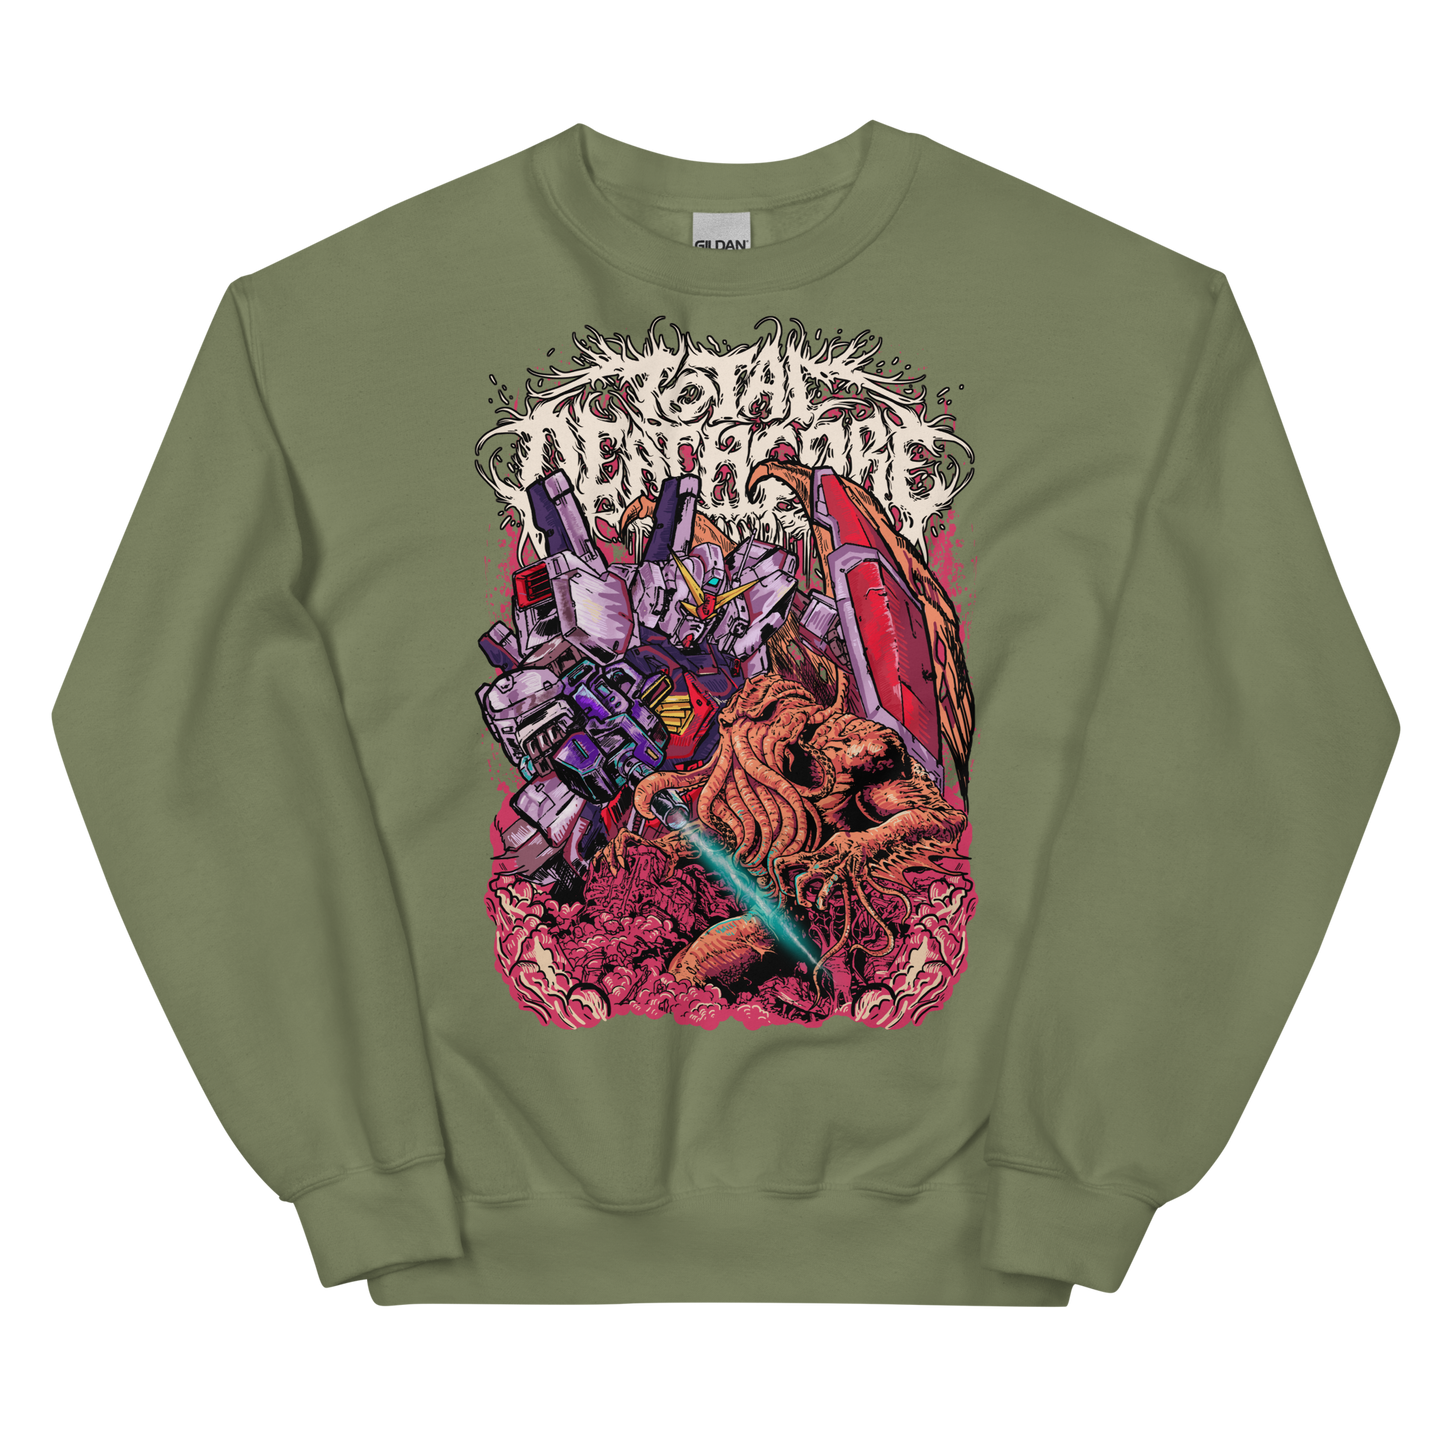 Total Deathcore "Final Fight" - Unisex Sweatshirt